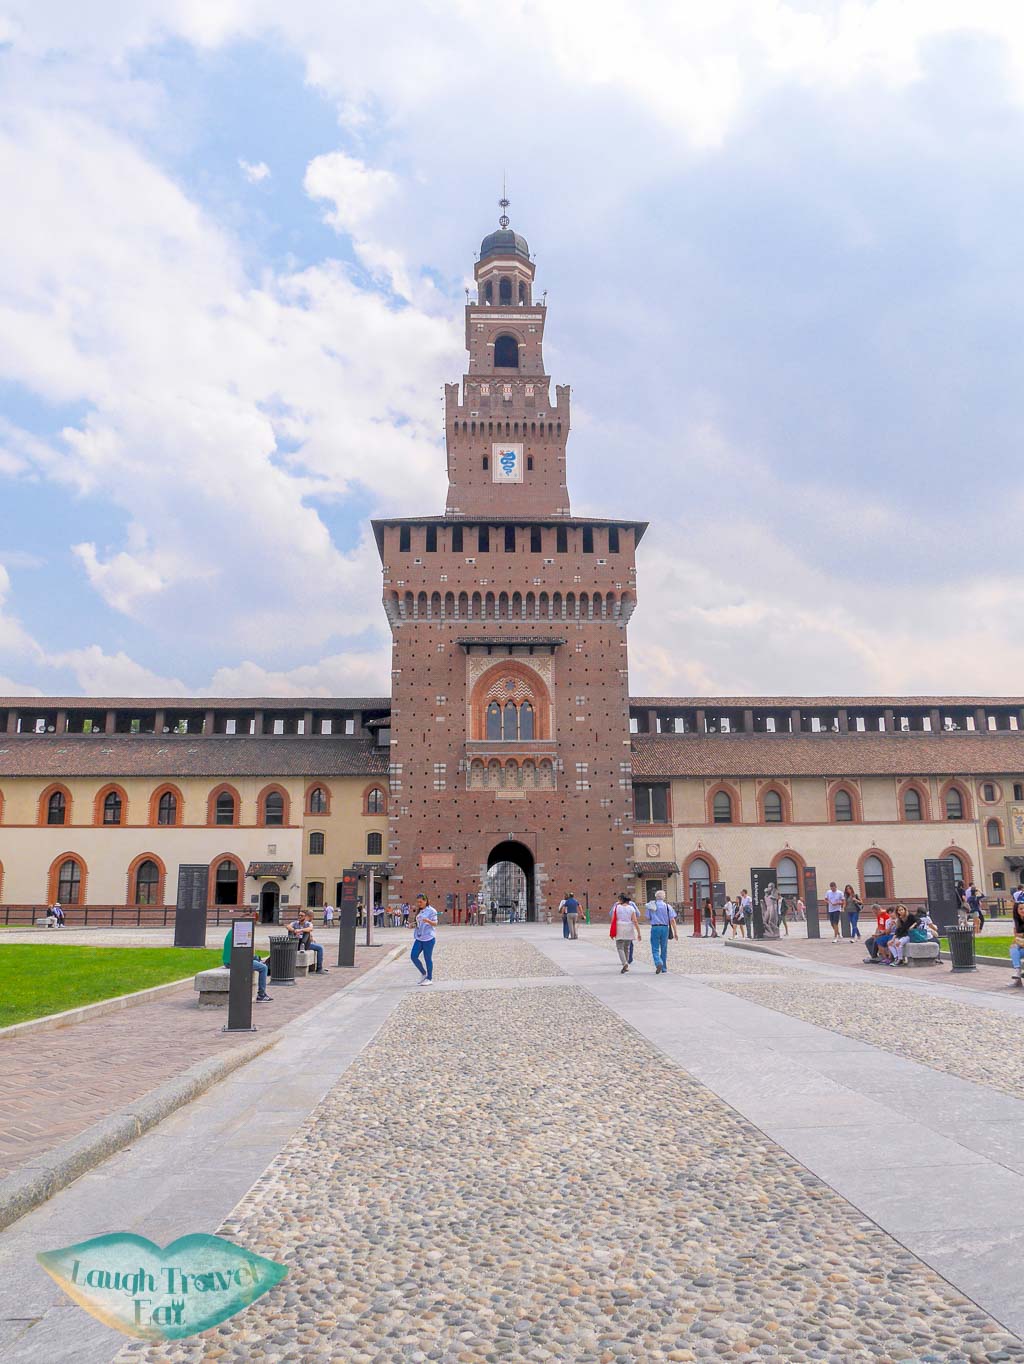 tower Sforza Castle, Milan, Italy - laugh travel eat